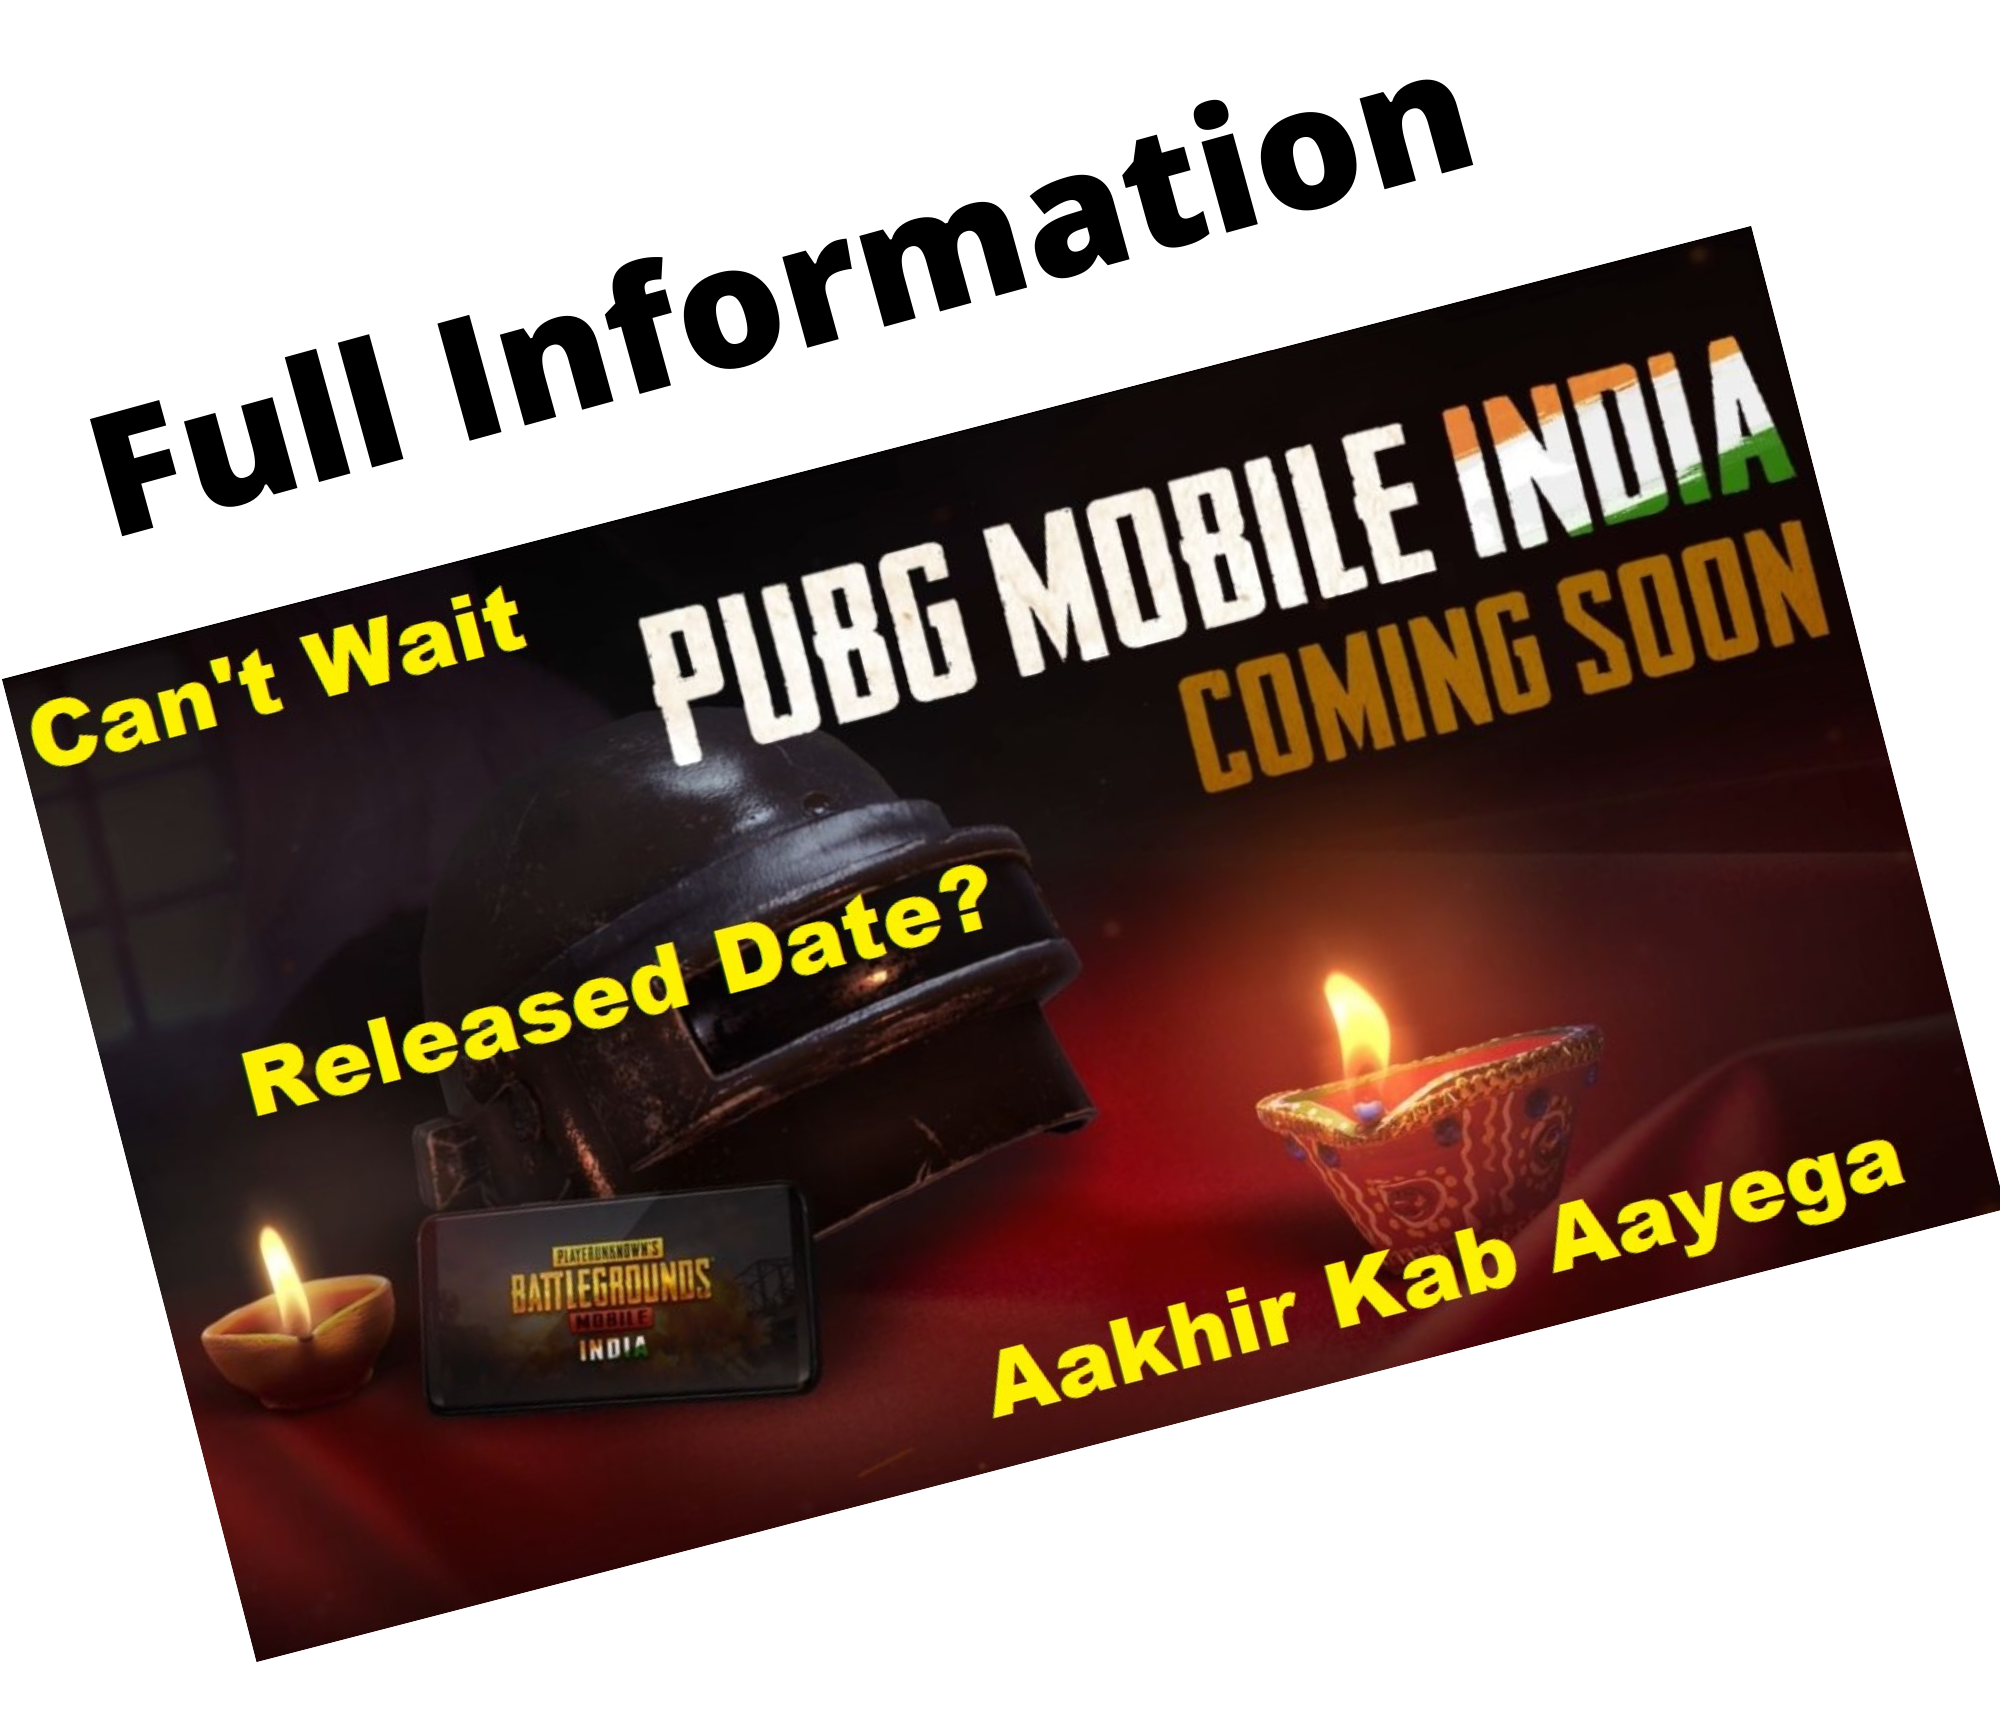 Pubg Mobile India Kab Launch Hoga